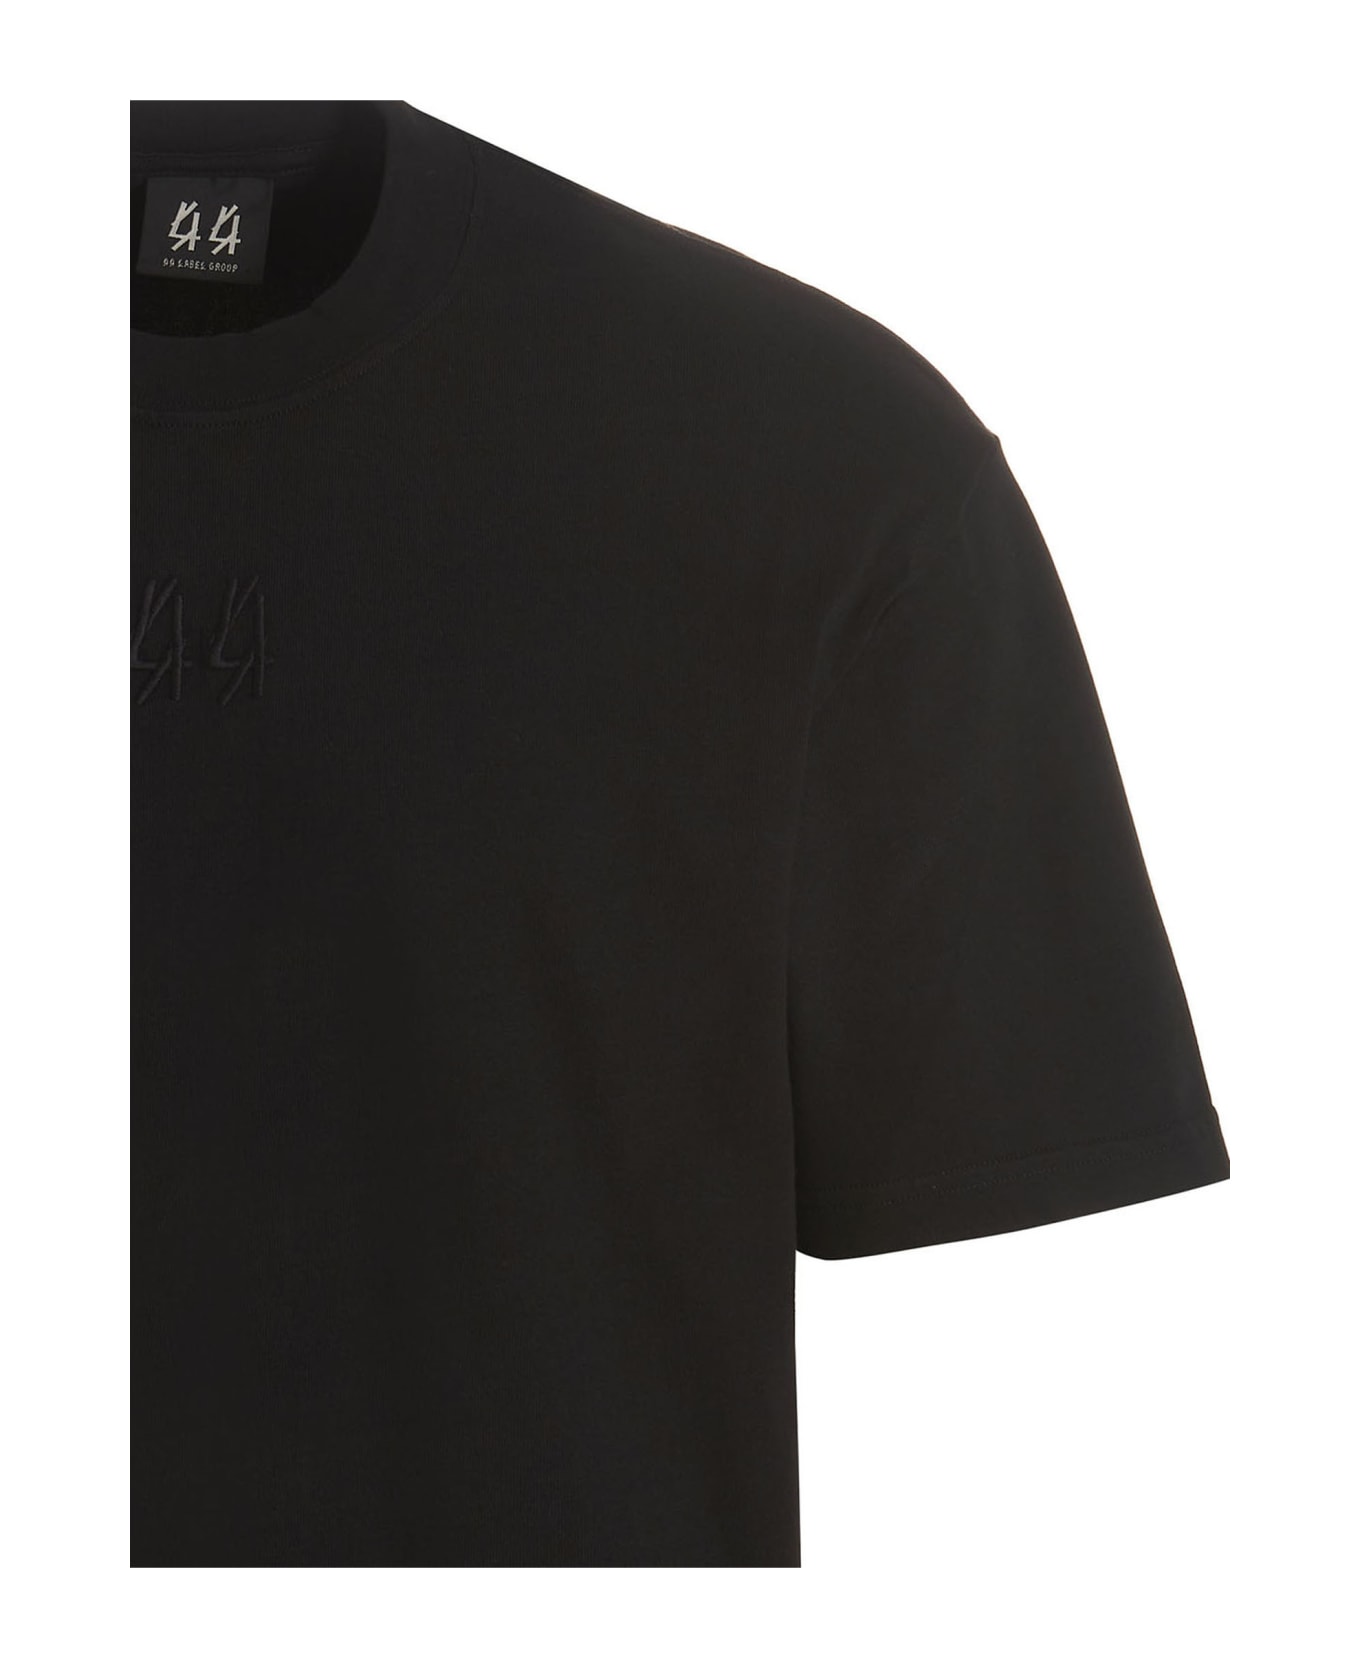 44 Label Group 'goose Down' T-shirt - Black  